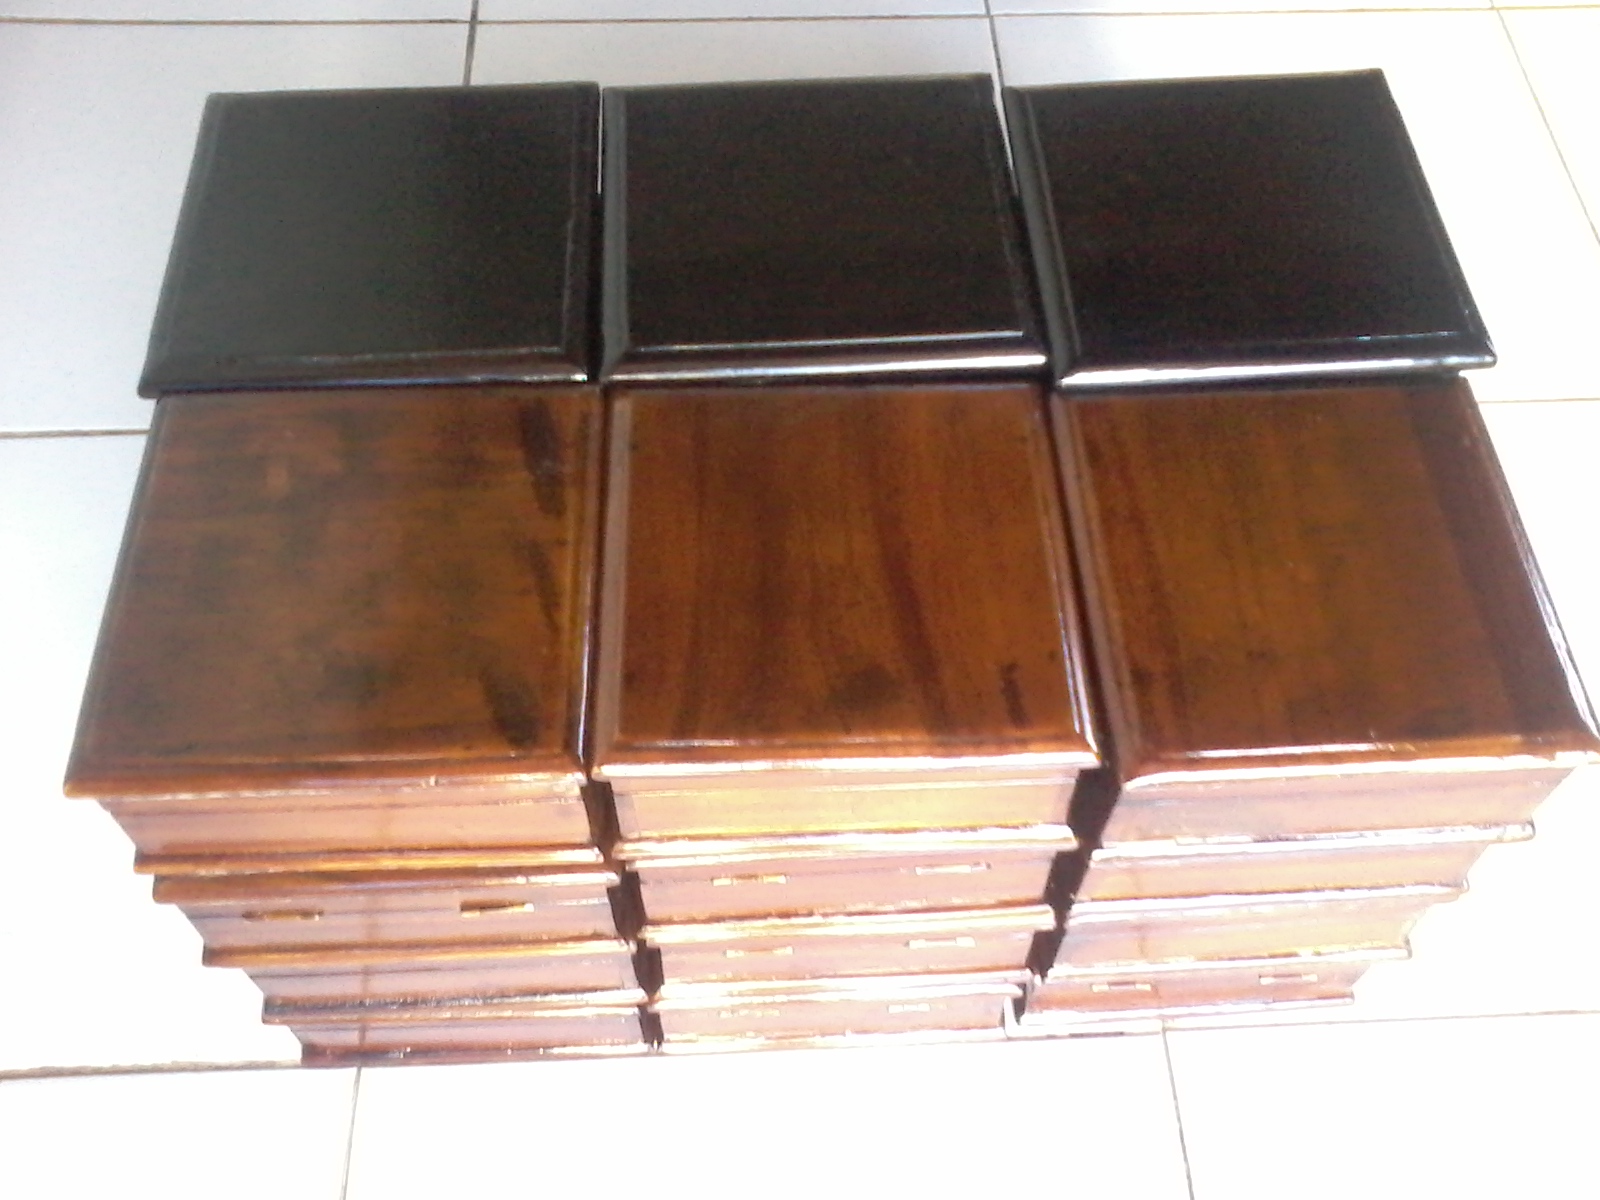 ZHULANCRAFT - Antique Wooden Box and Craft: TEMPAT KEMASAN 